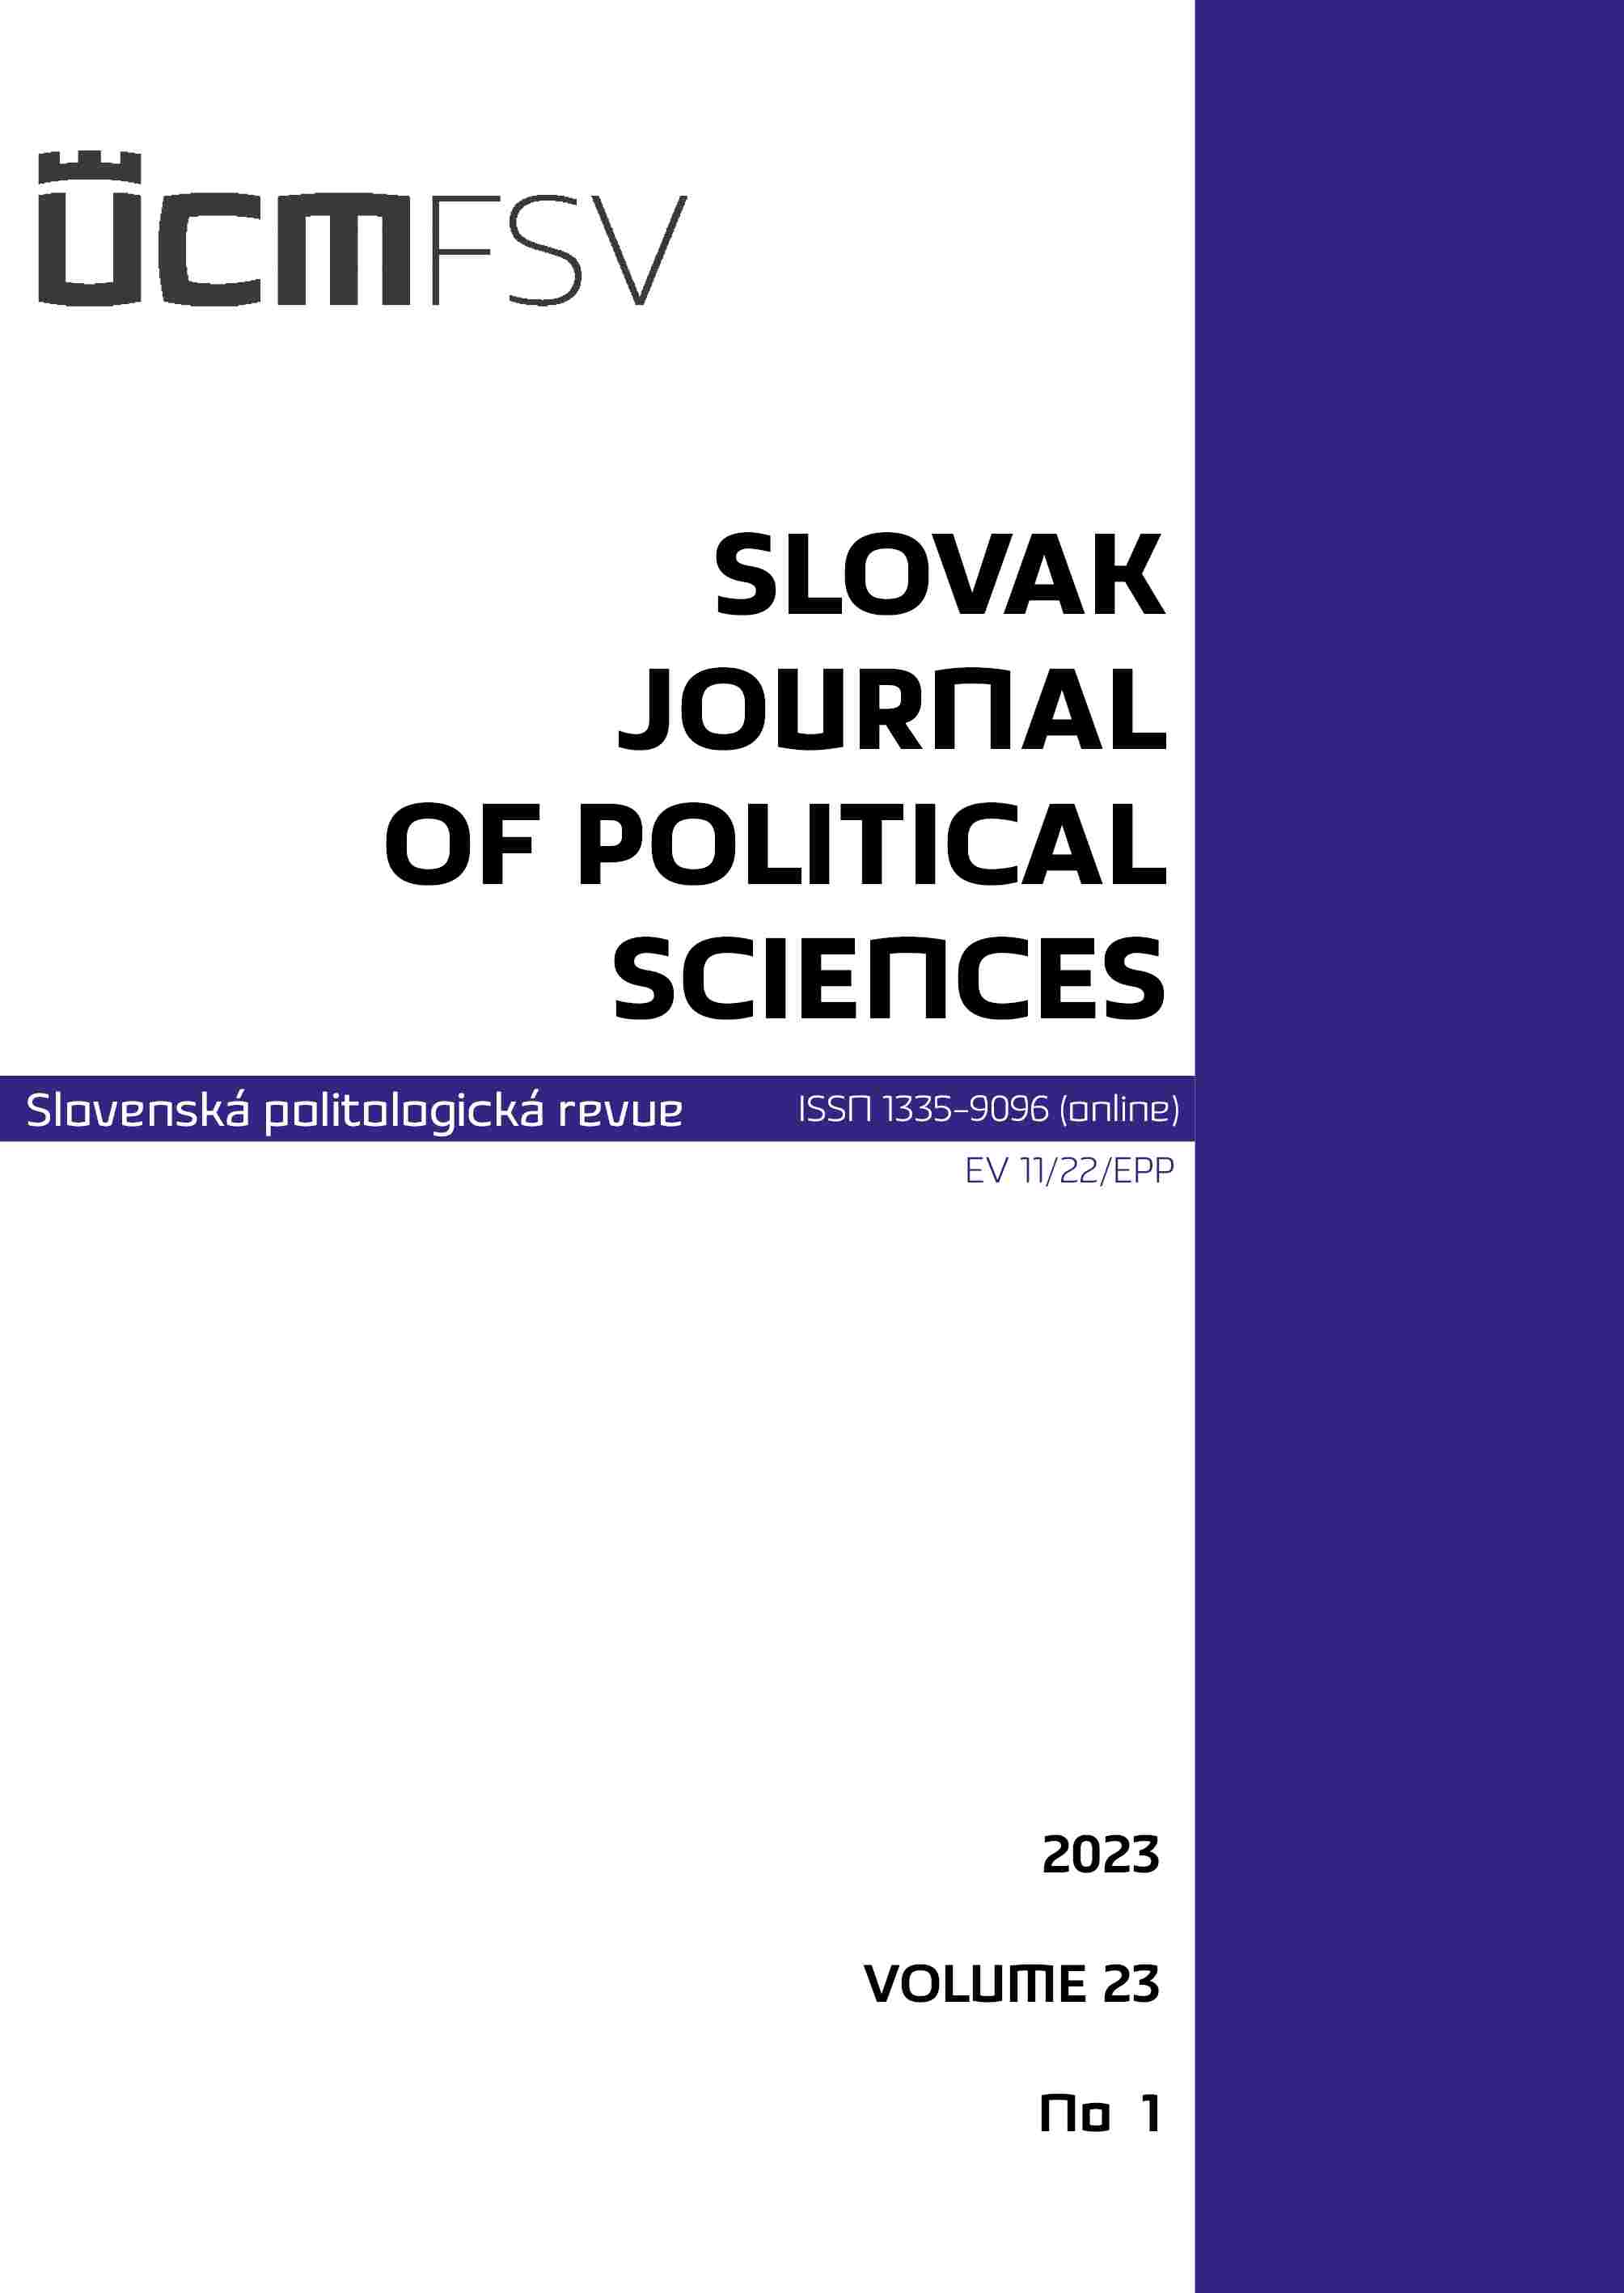 Lilleker, D.; Coman, I. A.; Gregor, M.; Novelli, E. eds. (2021). Political Communication and Covid-19. Governance and Rhetoric in Times of Crisis